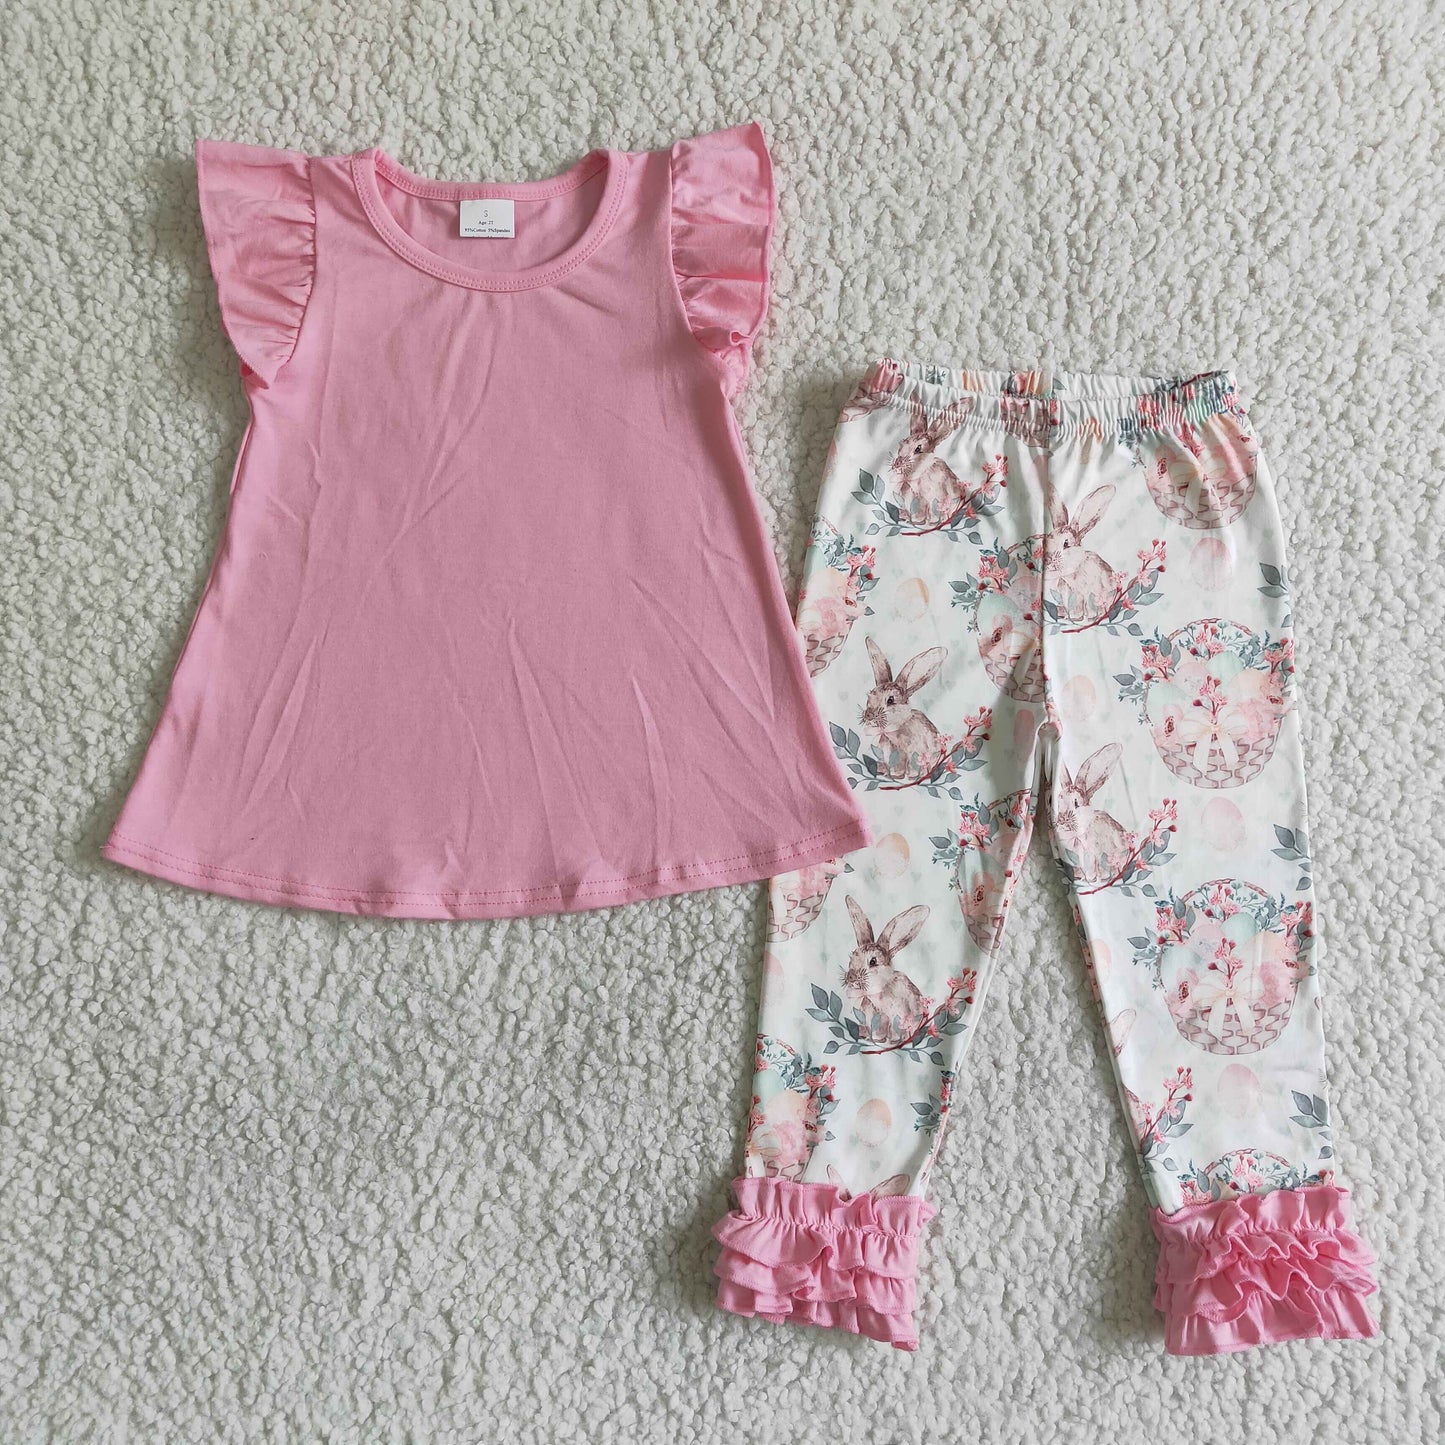 Baby girls pink top rabbit leggings outfits kids Easter clothing B13-28